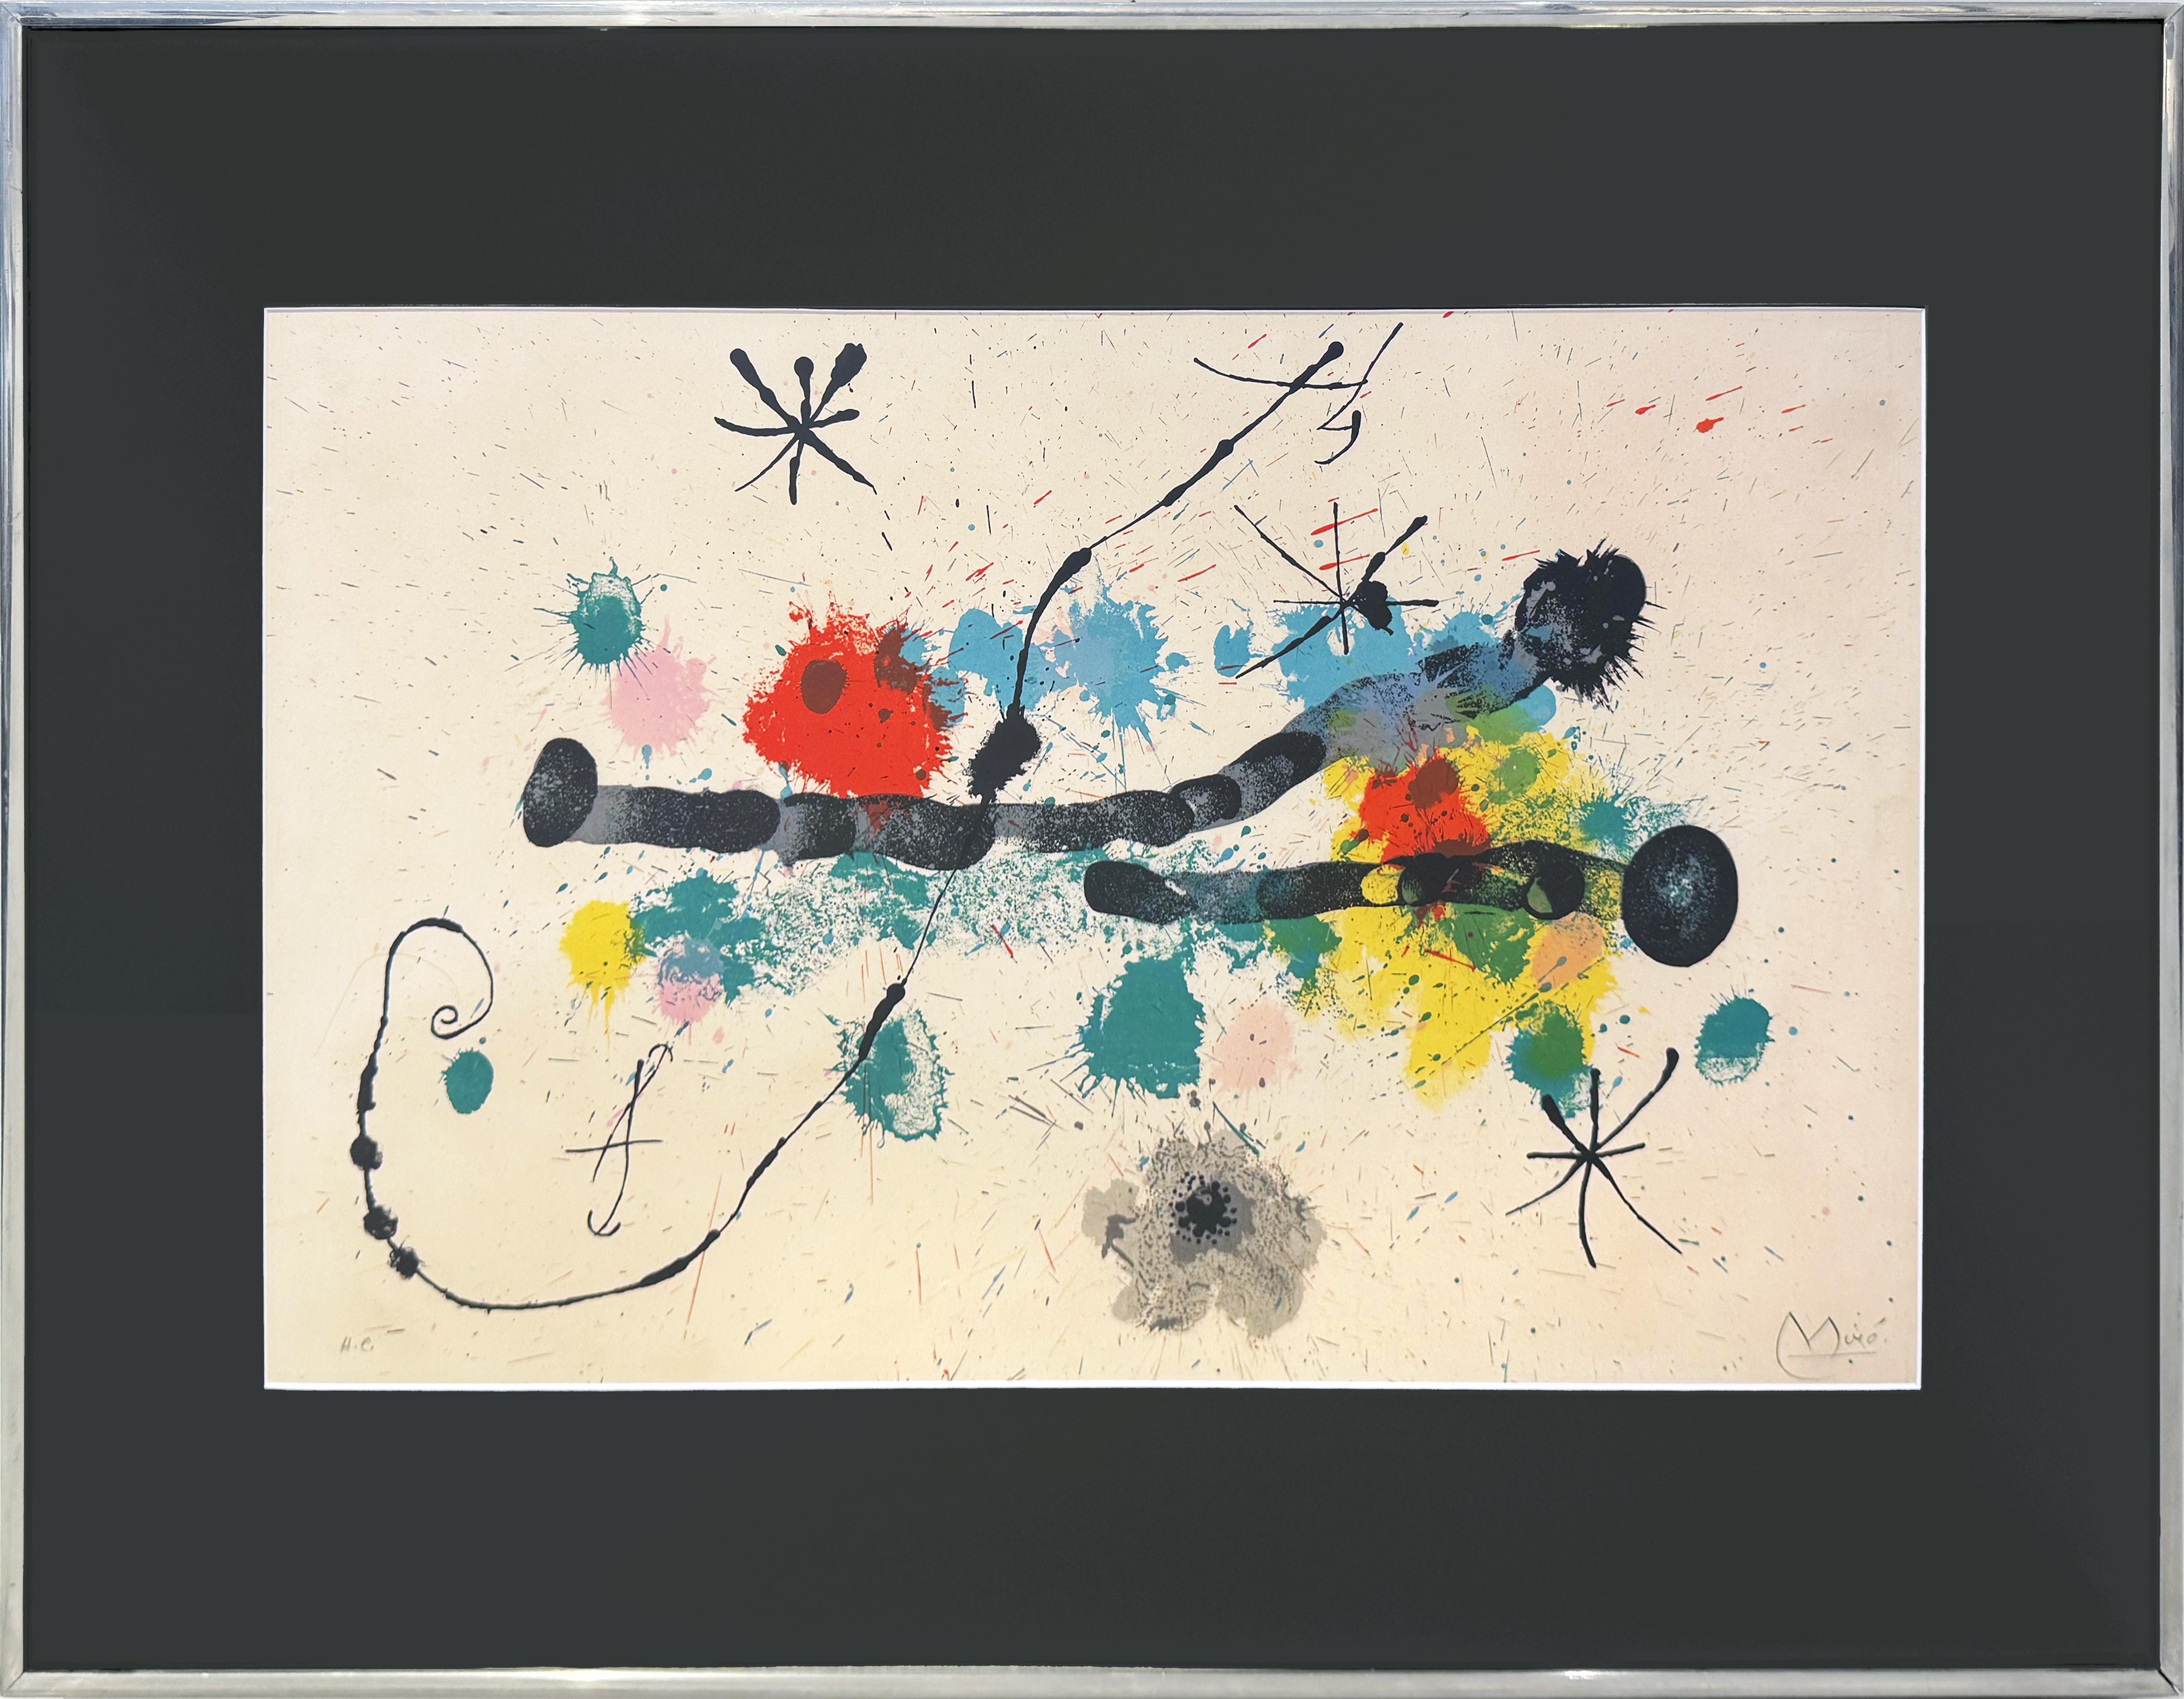 Je Travaille Comme Un Jardinier (I Work Like a Gardener) - Print by Joan Miró